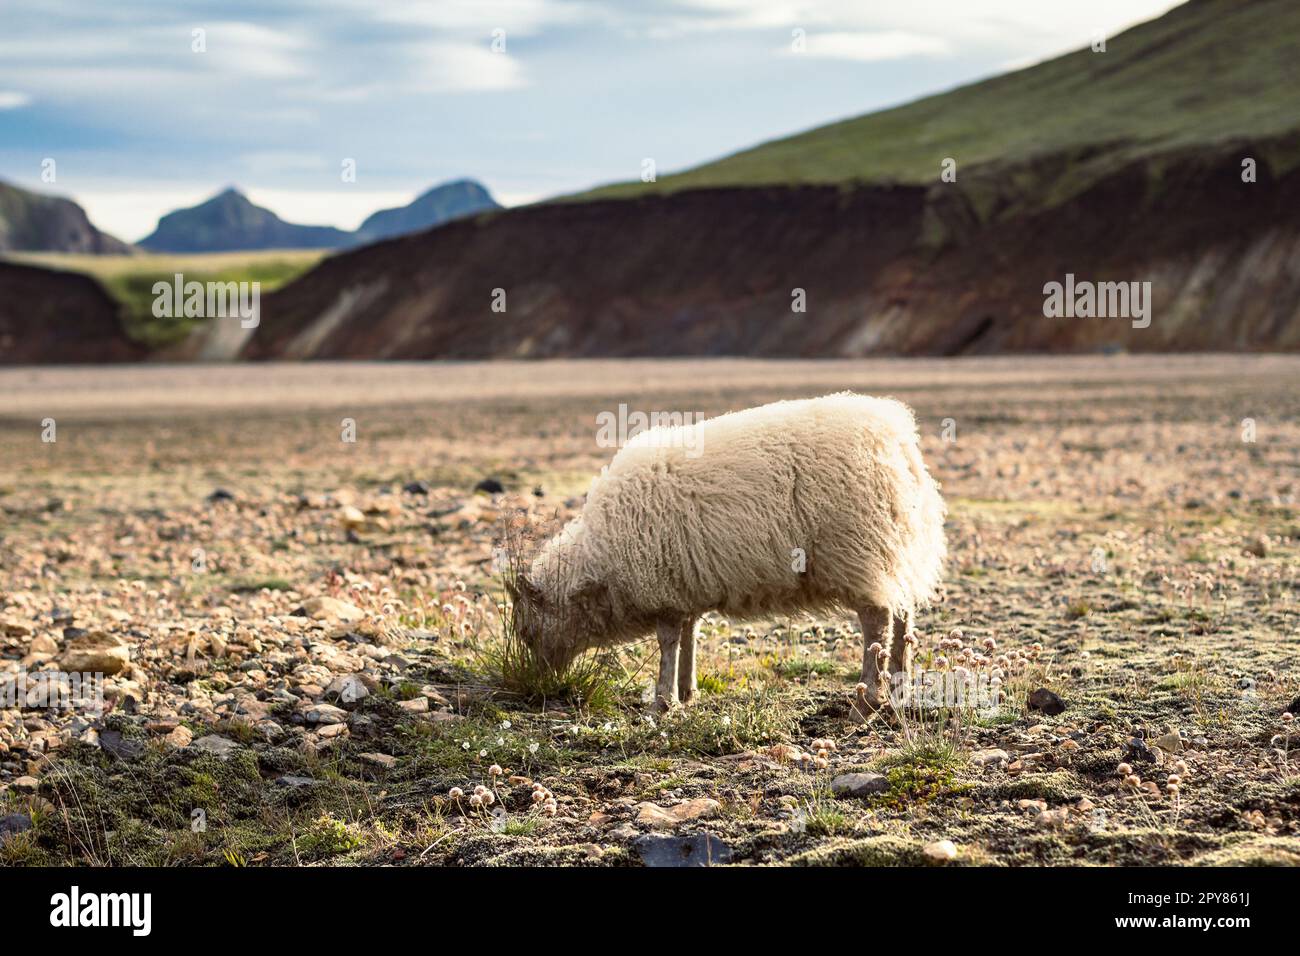 Sheep eating grass on pasture landscape photo Stock Photo